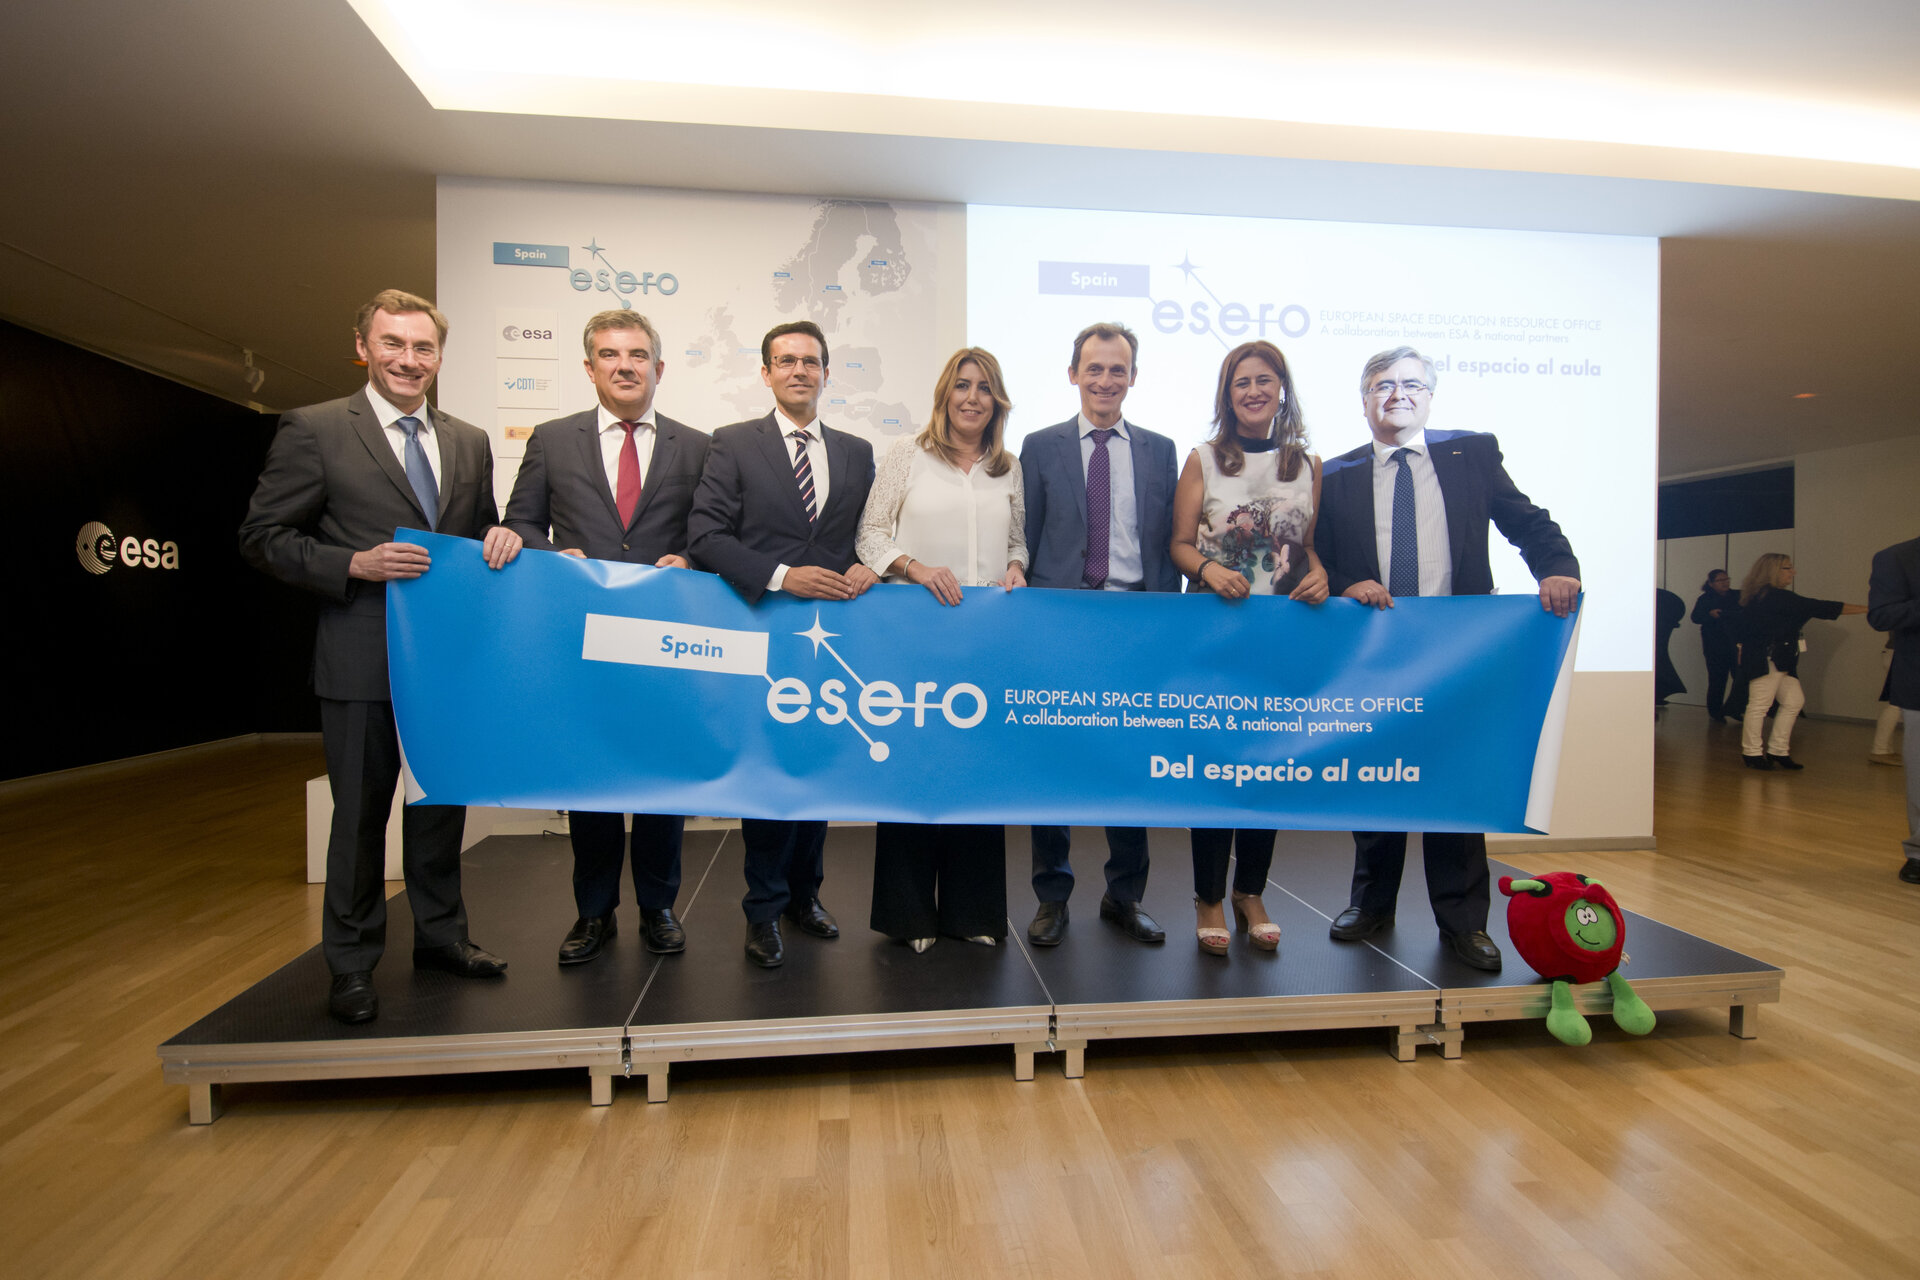 Esa and Spanish authorities celebrate the inauguration of Esero Spain